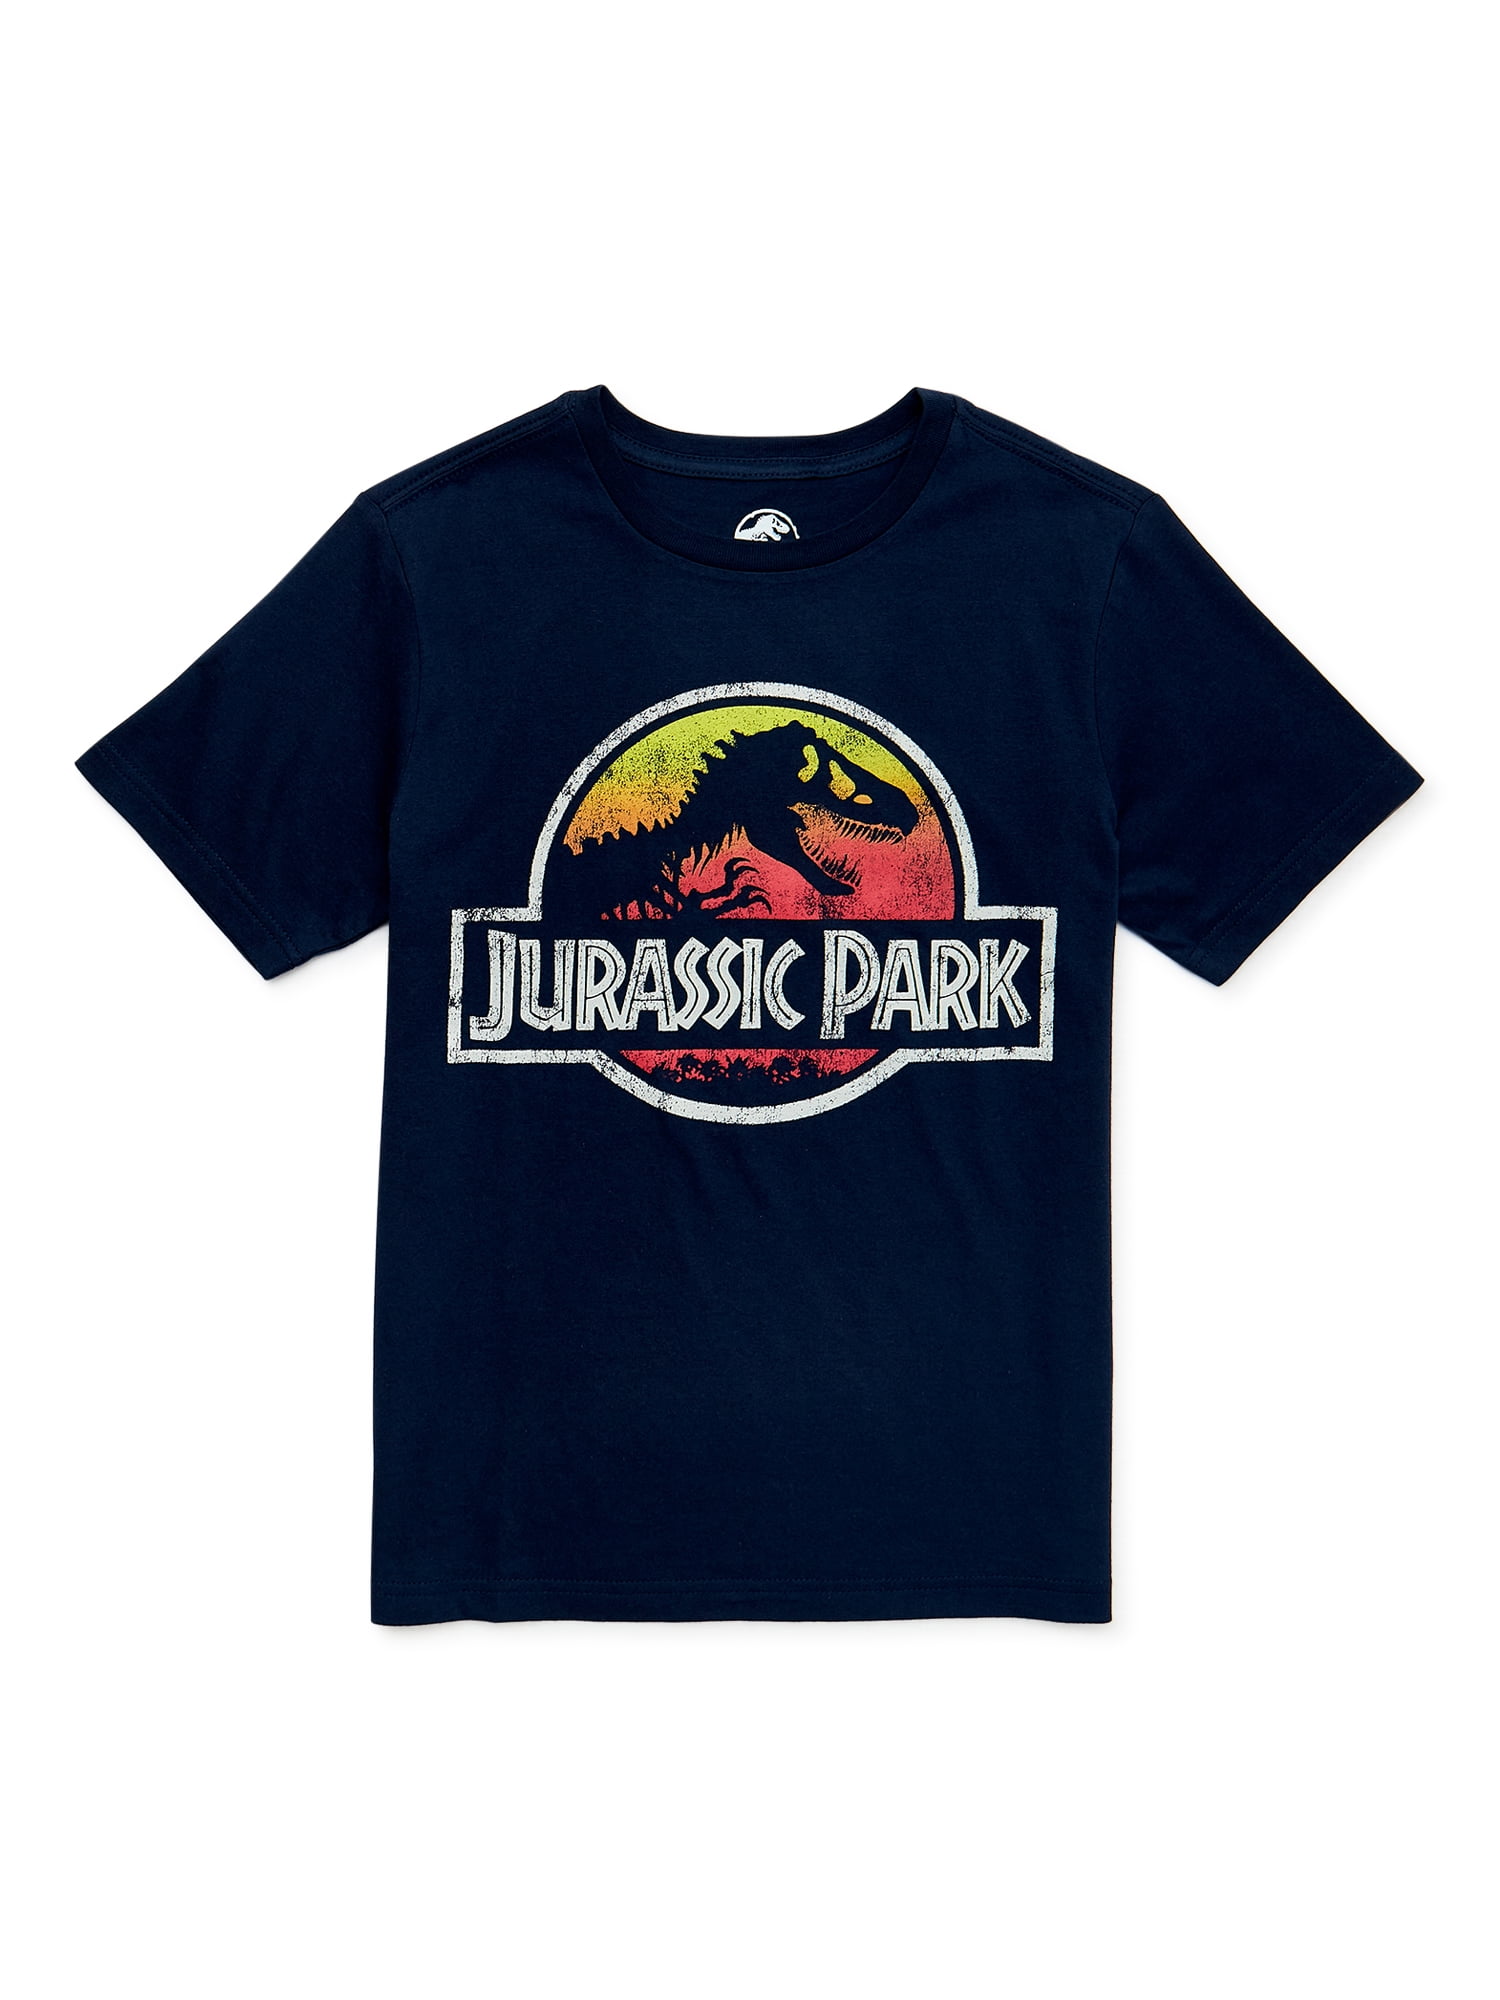 Jurassic Park Boys Logo T-Shirt with Short Sleeves, Sizes 4-18